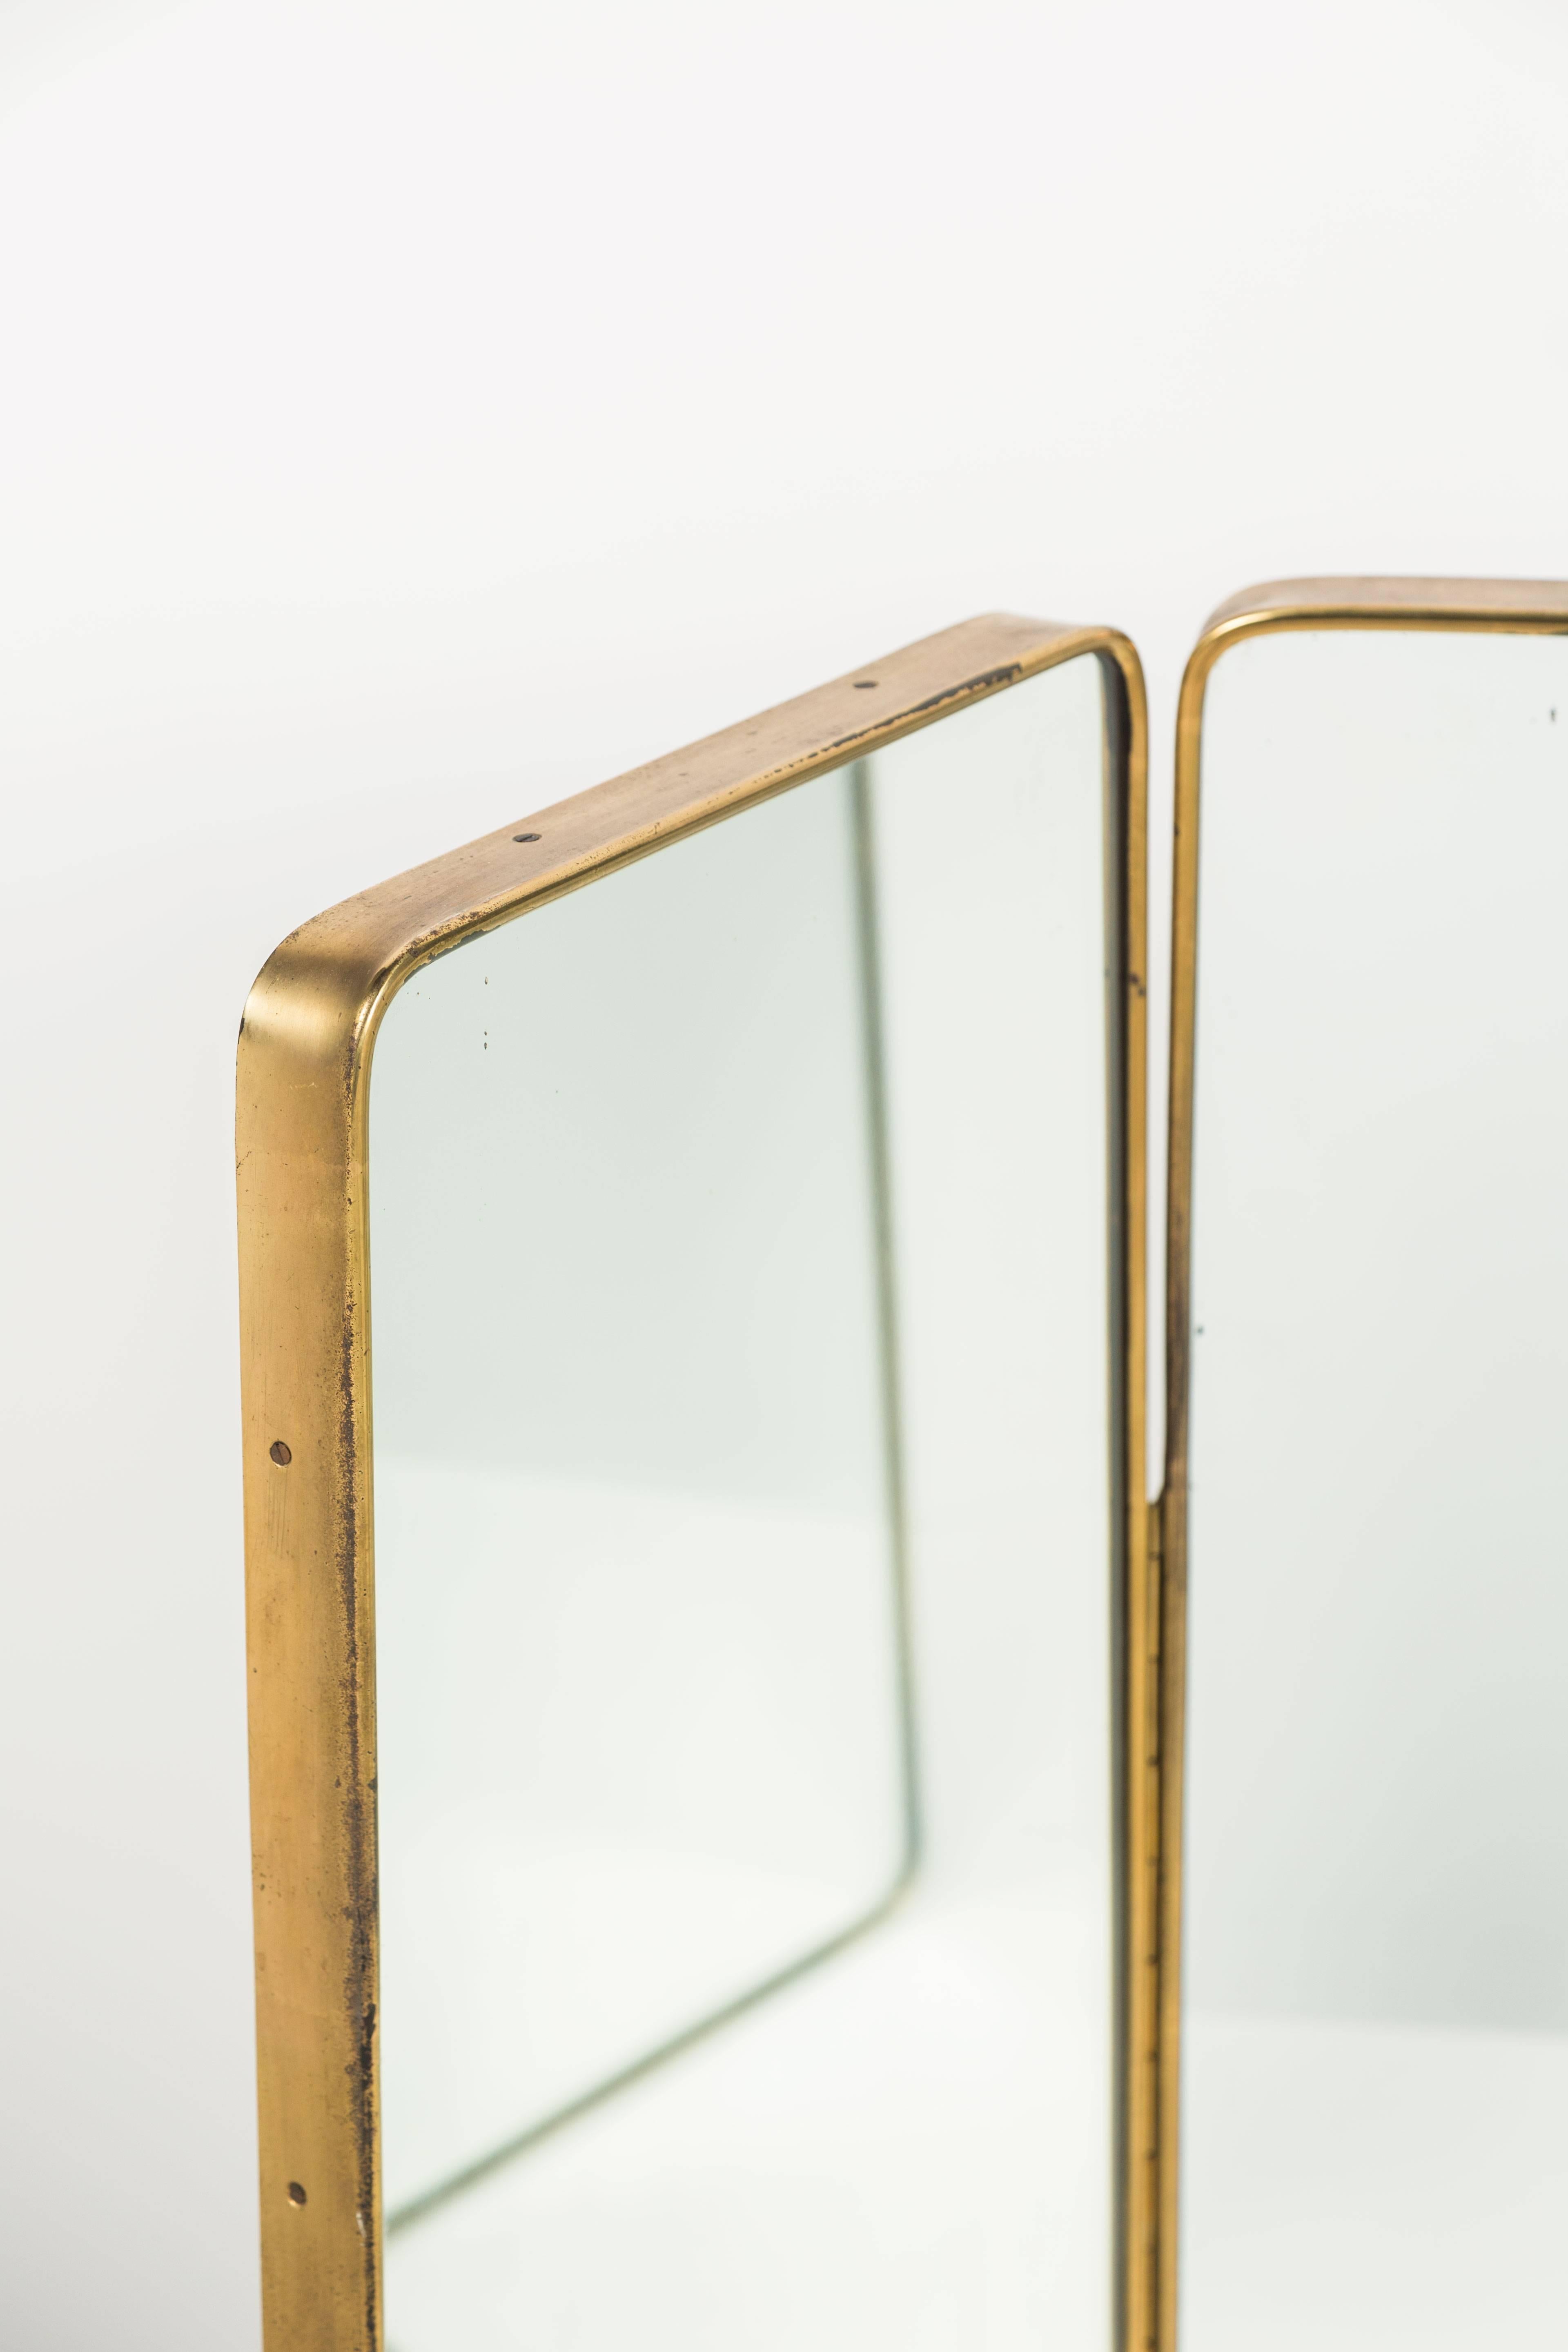 Italian brass tri-fold, three-way hinged table vanity mirror, Made in Italy, circa 1960s.